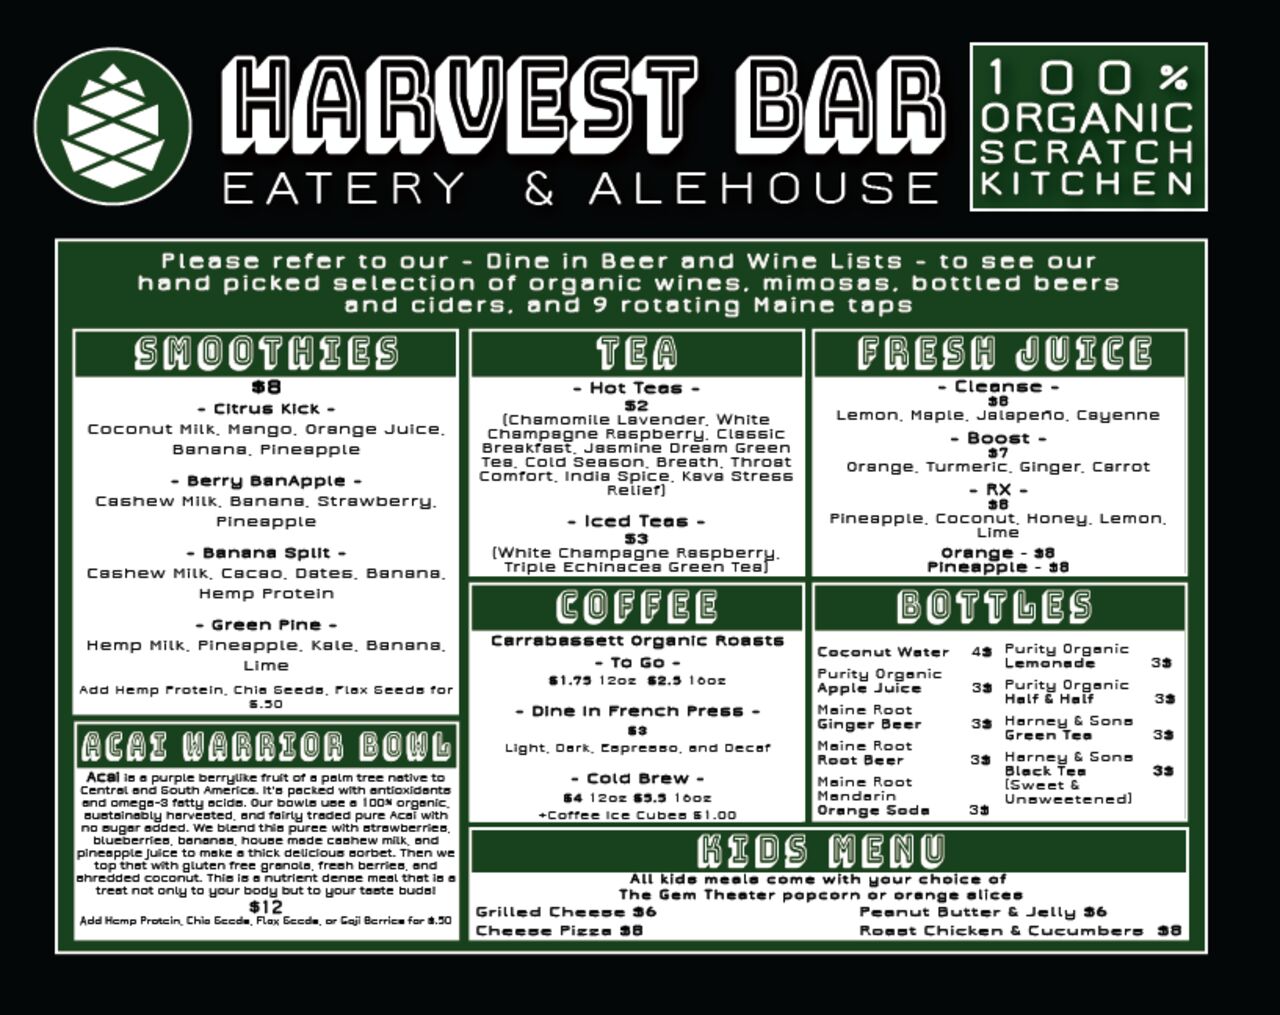 A photo of Harvest Bar